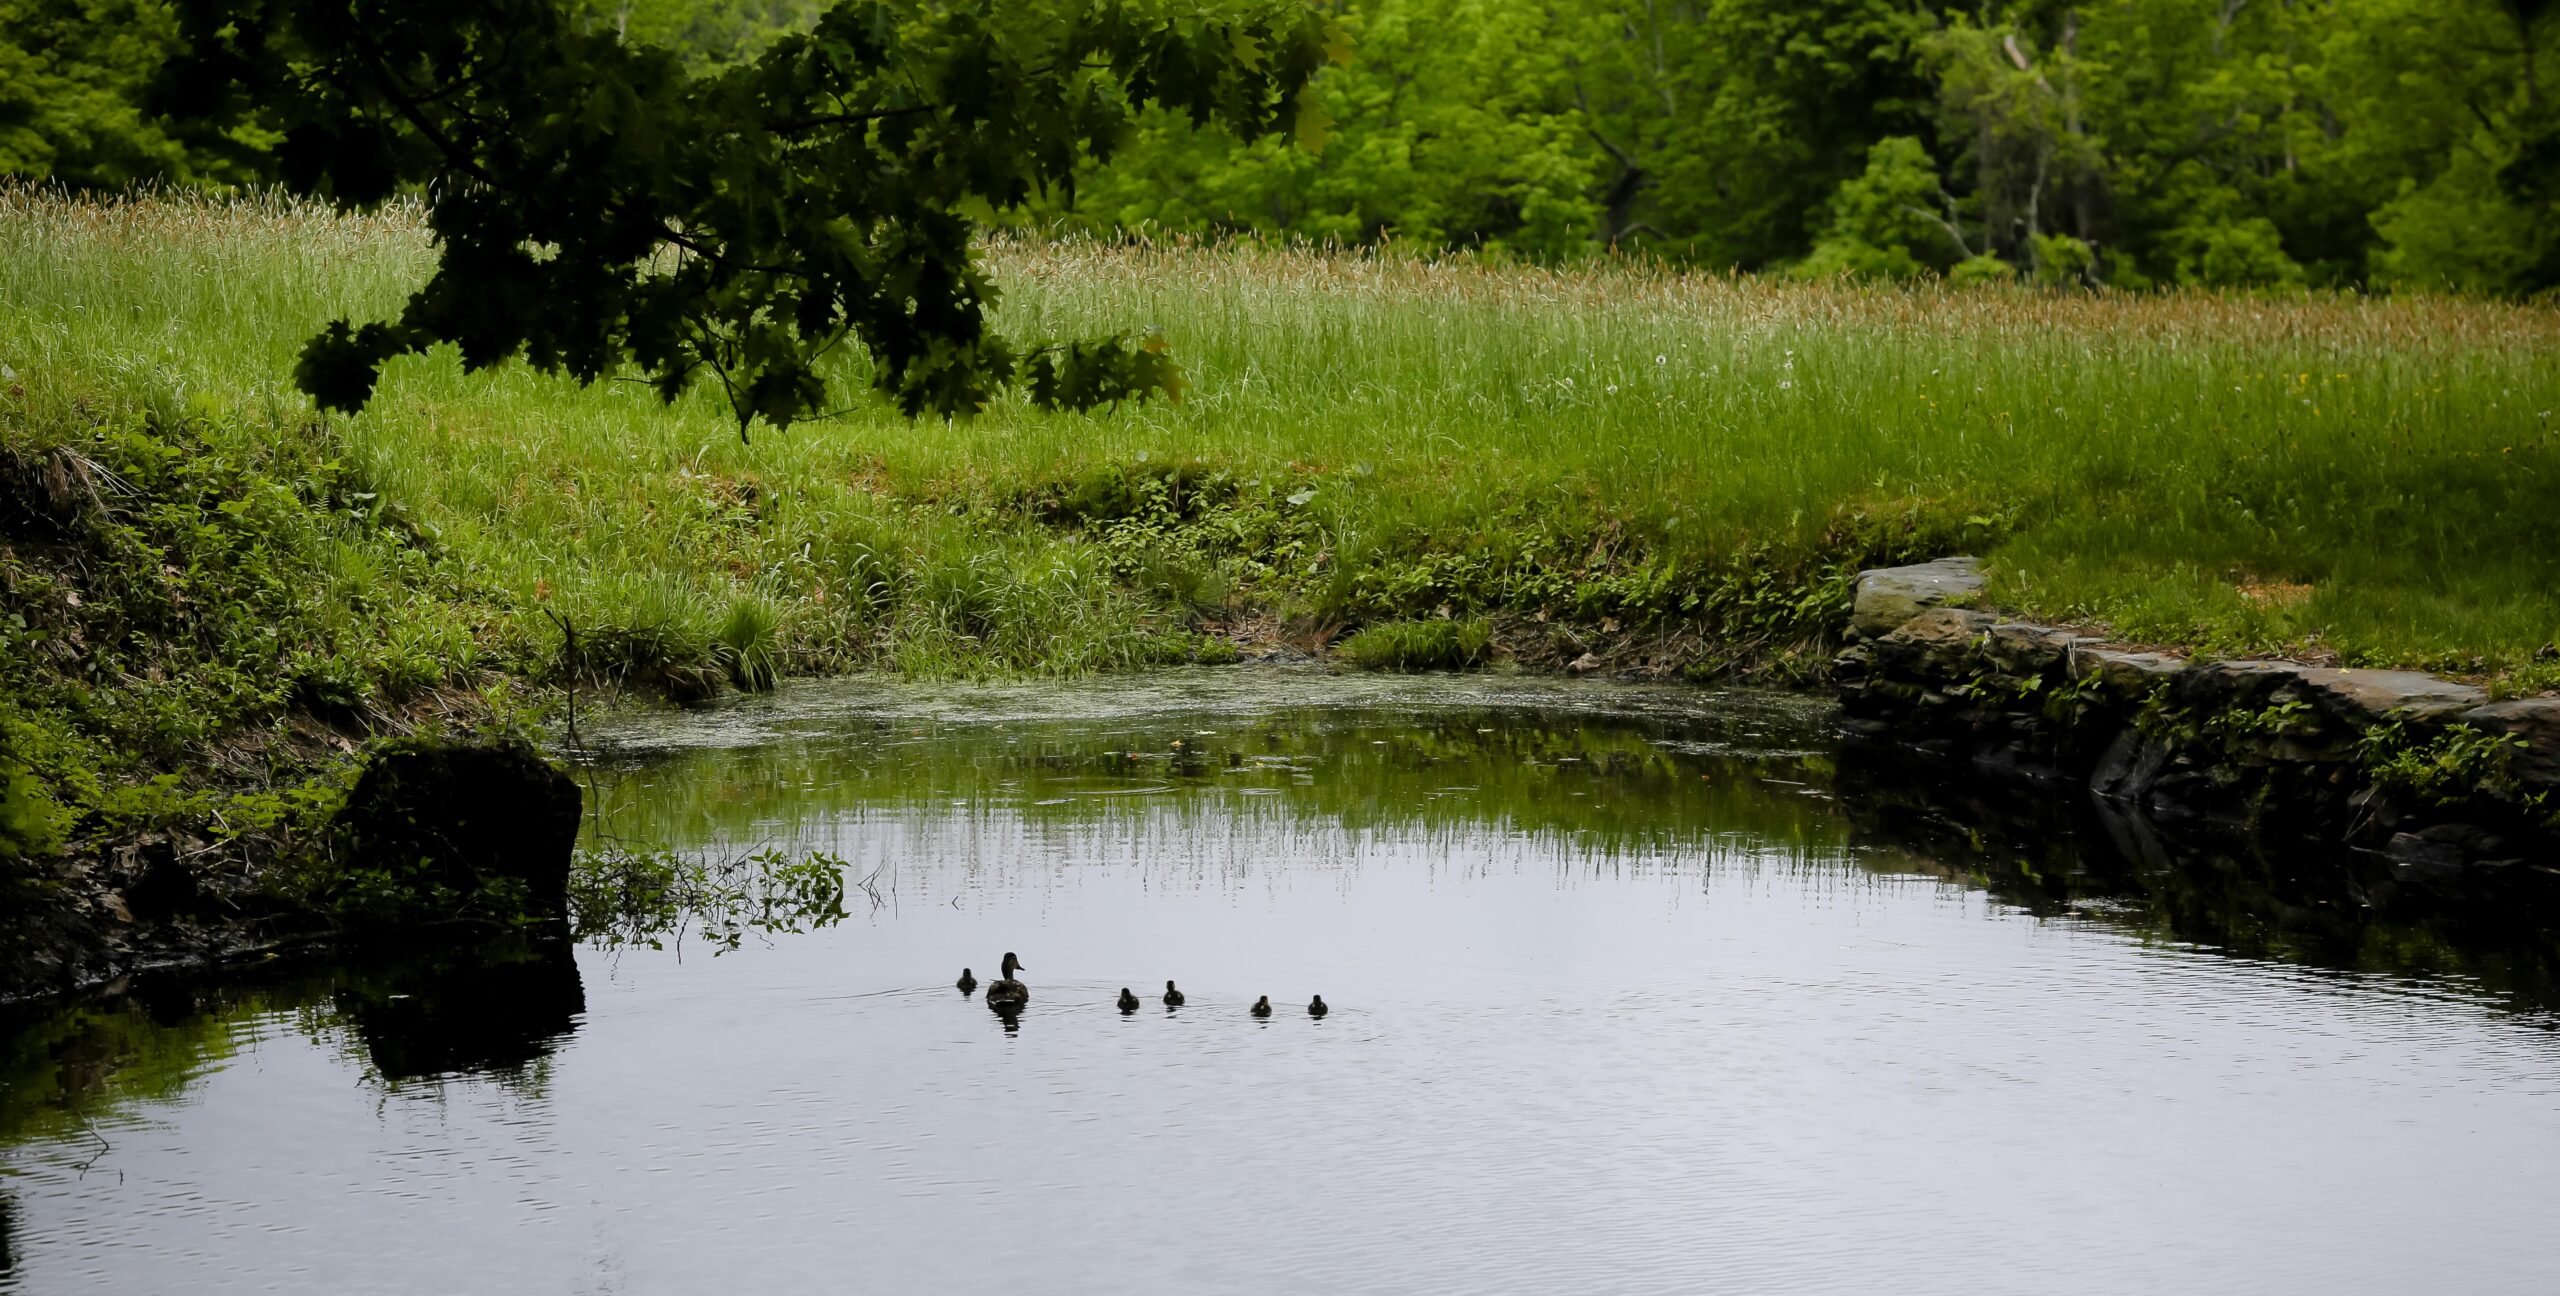 Ducks on a pond.